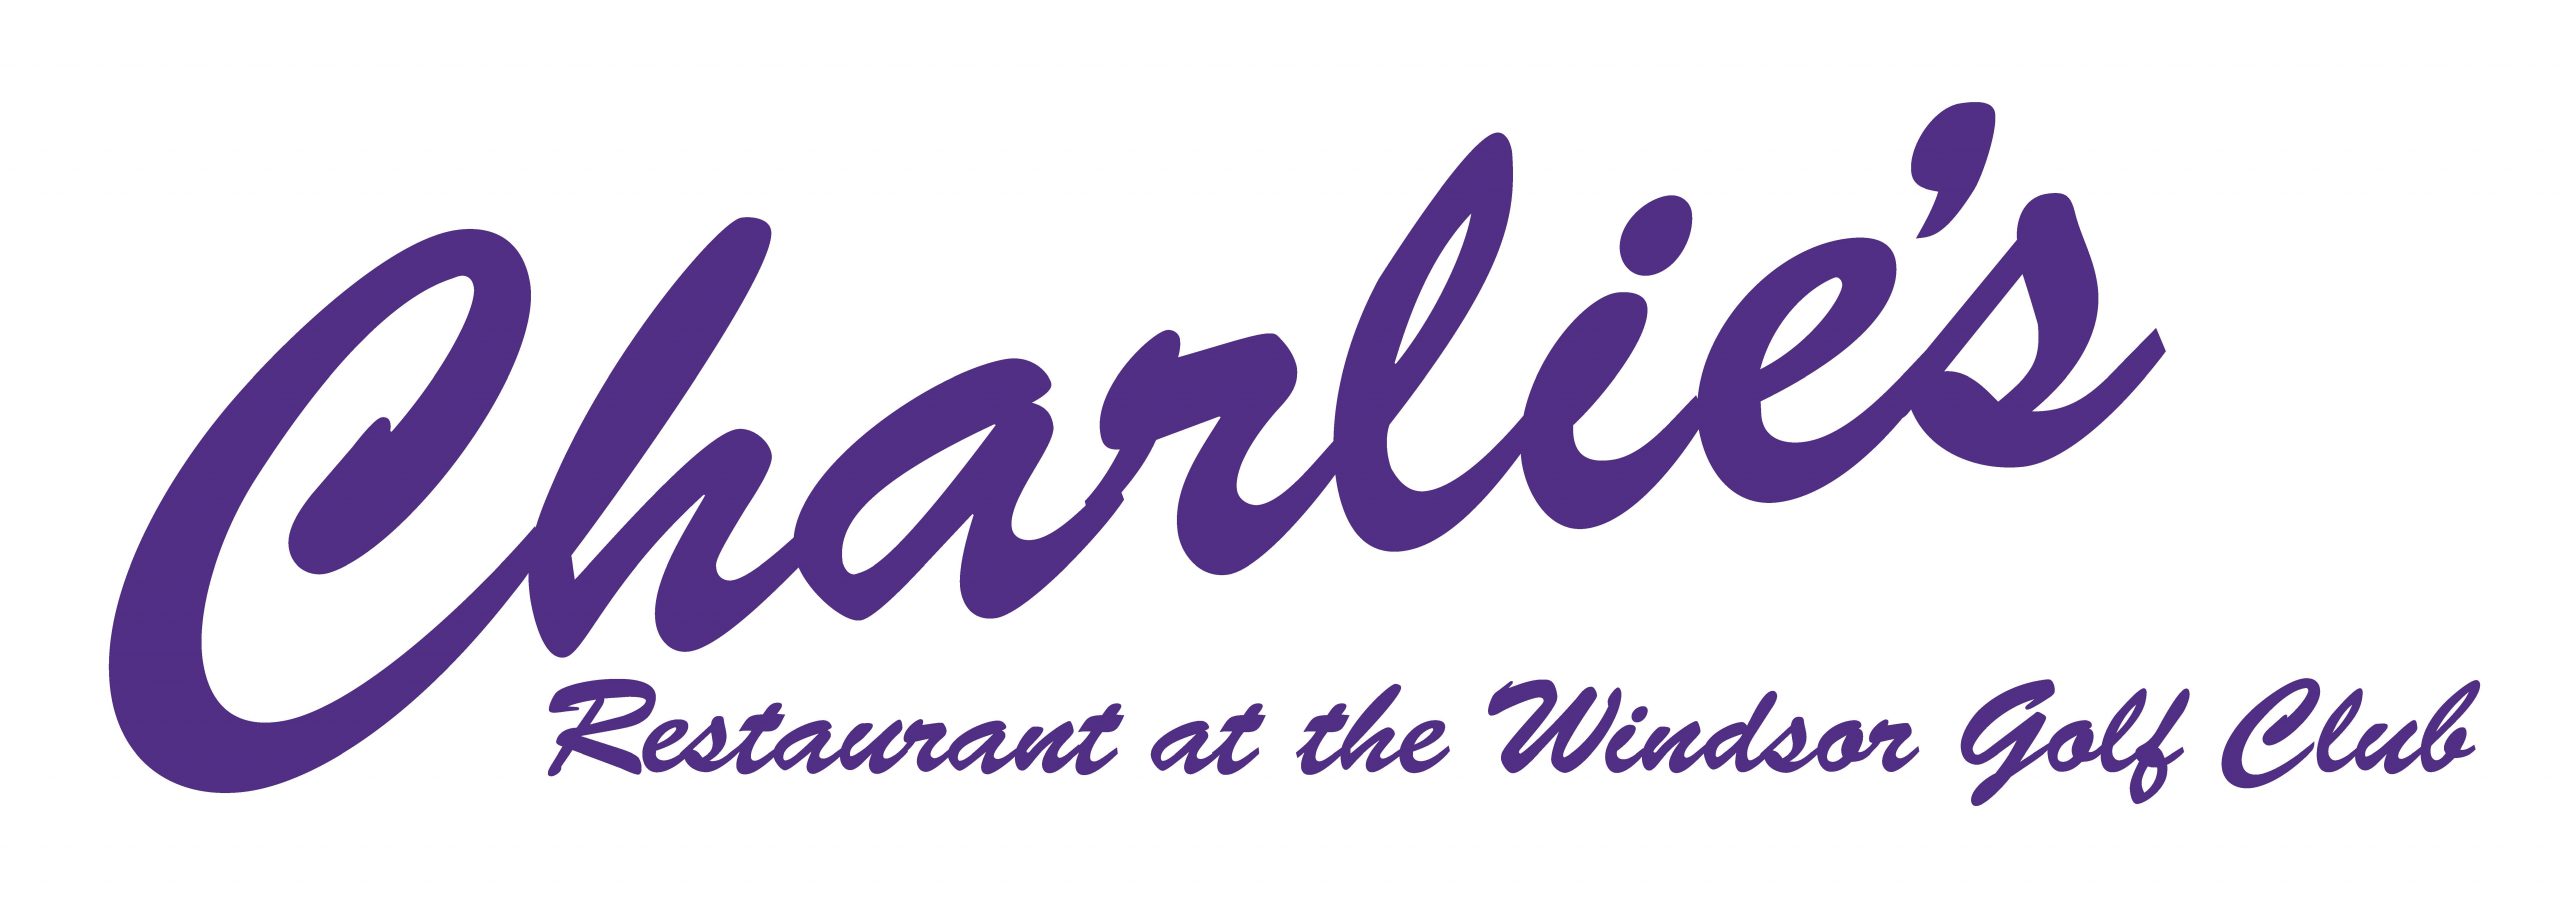 Charlie's Restaurant at Windsor Golf Club